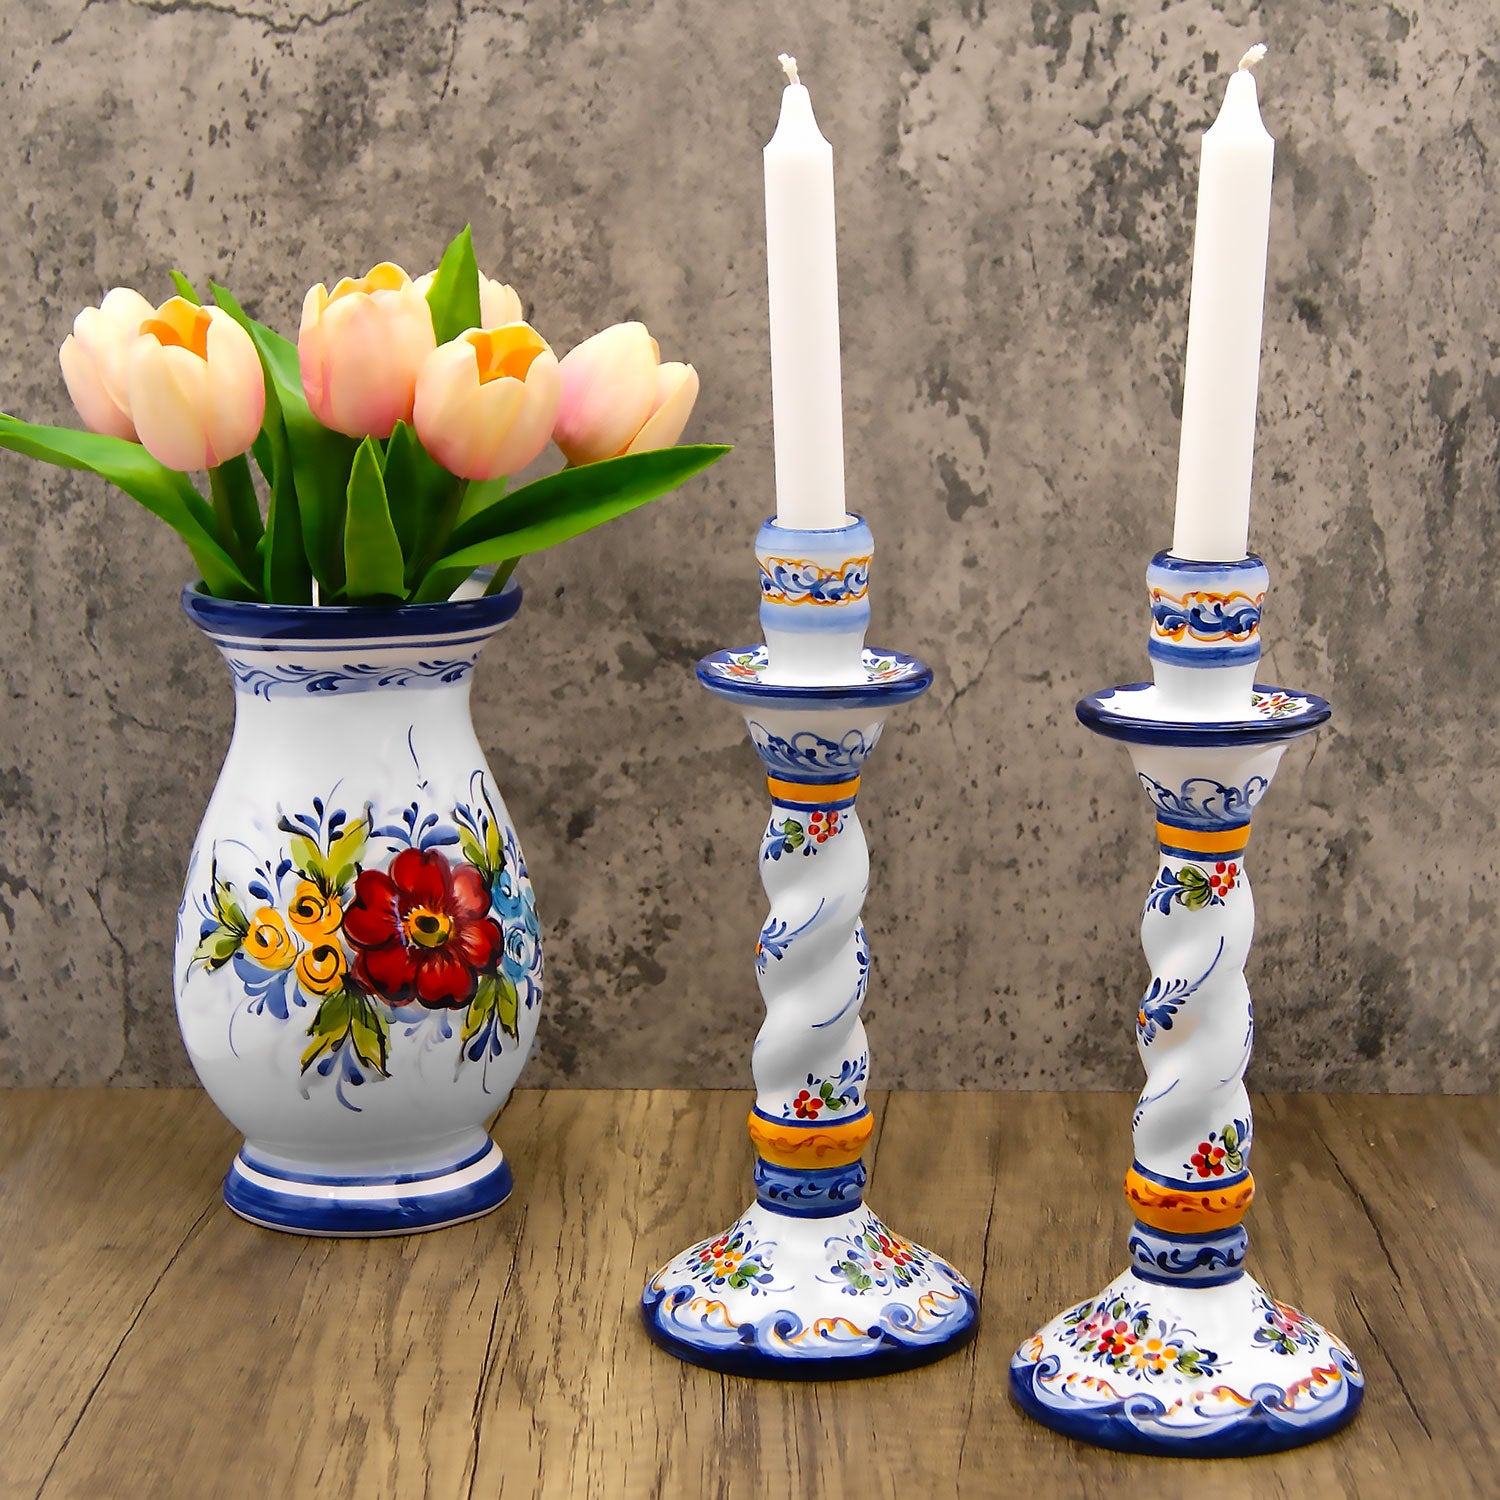 Portuguese Pottery Alcobaça Ceramic Hand Painted Ceramic Candle Holder – Set of 2